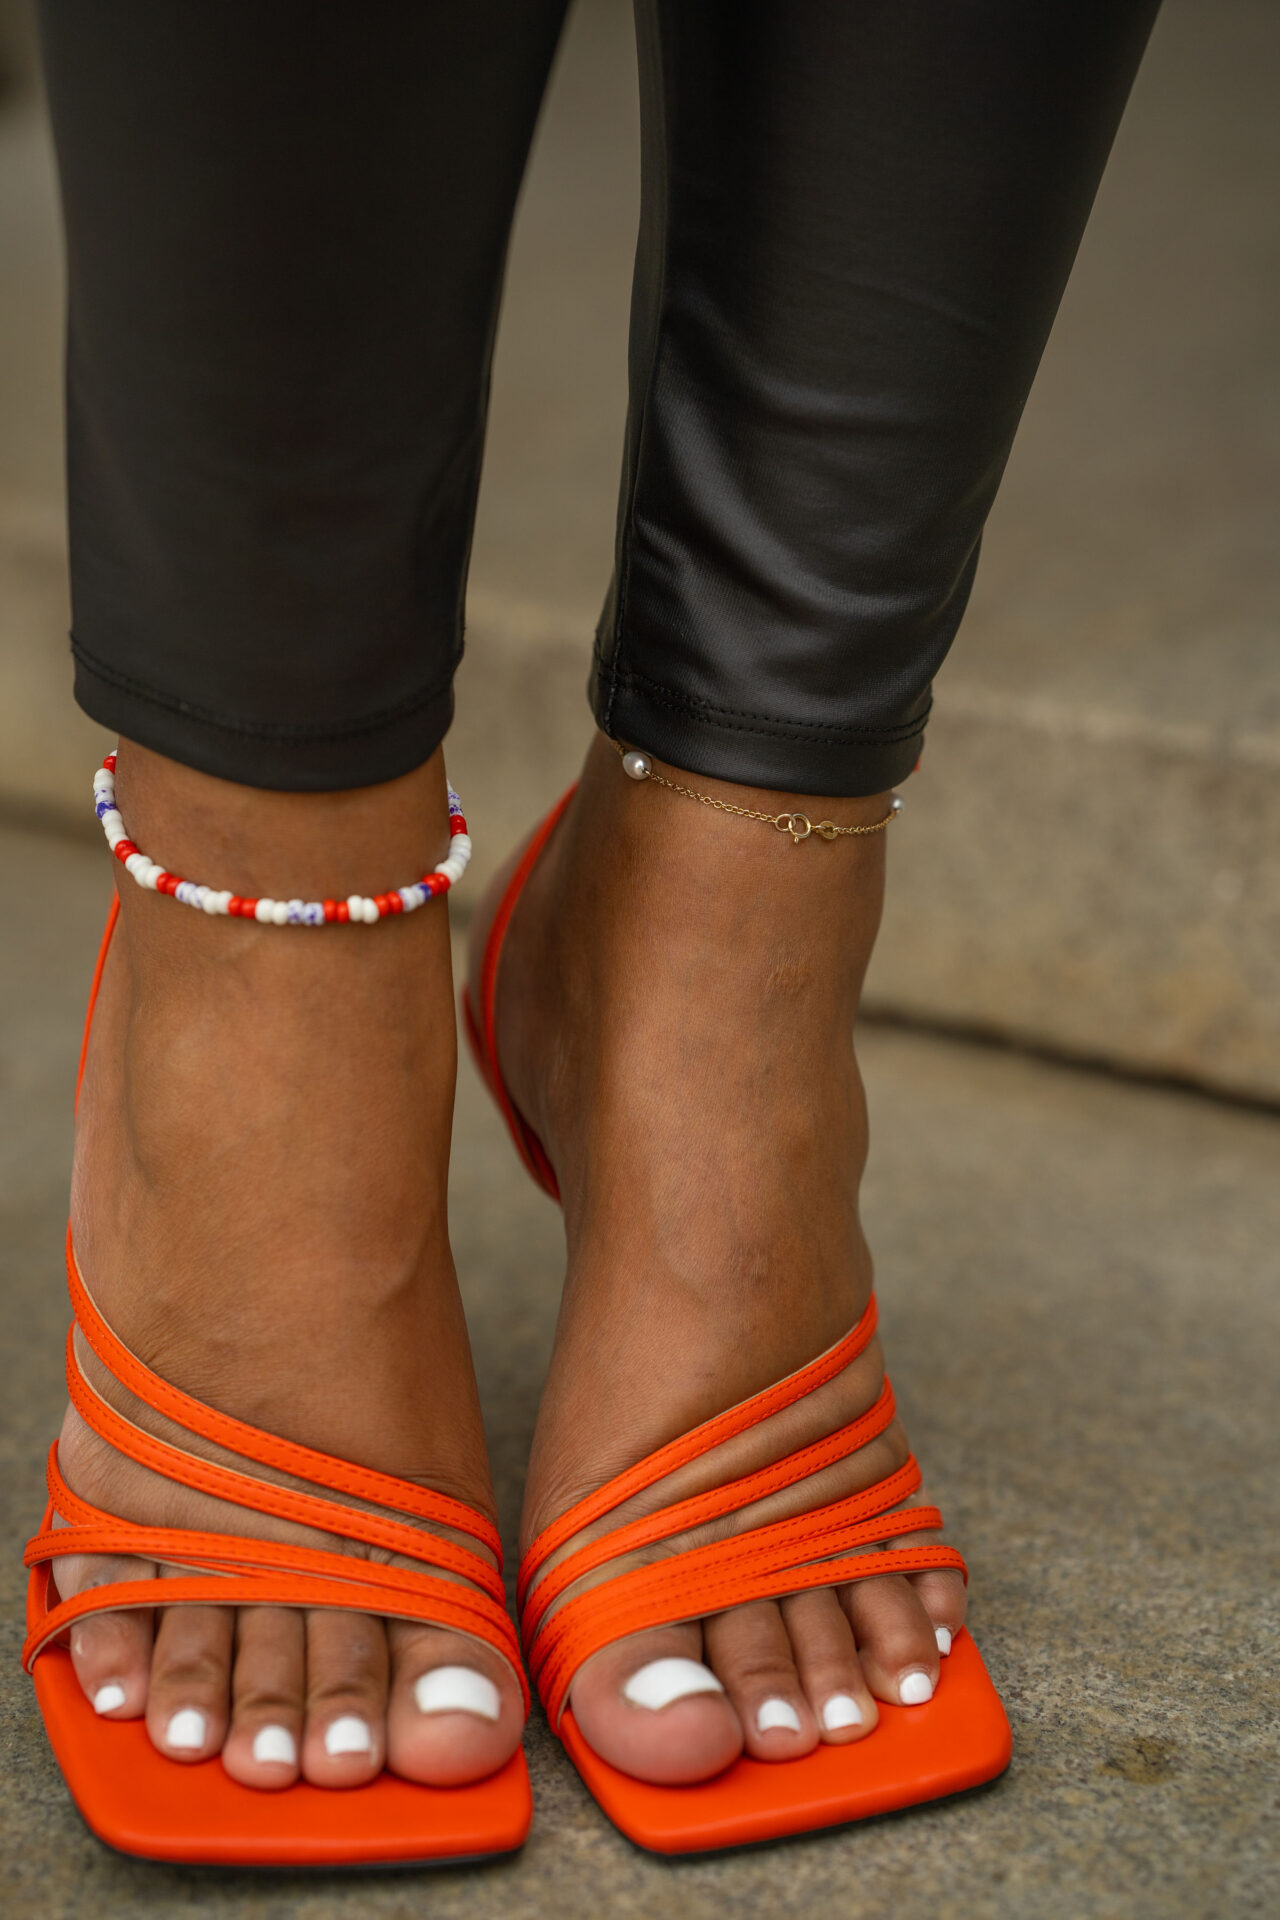 Three heels type to elongate your legs